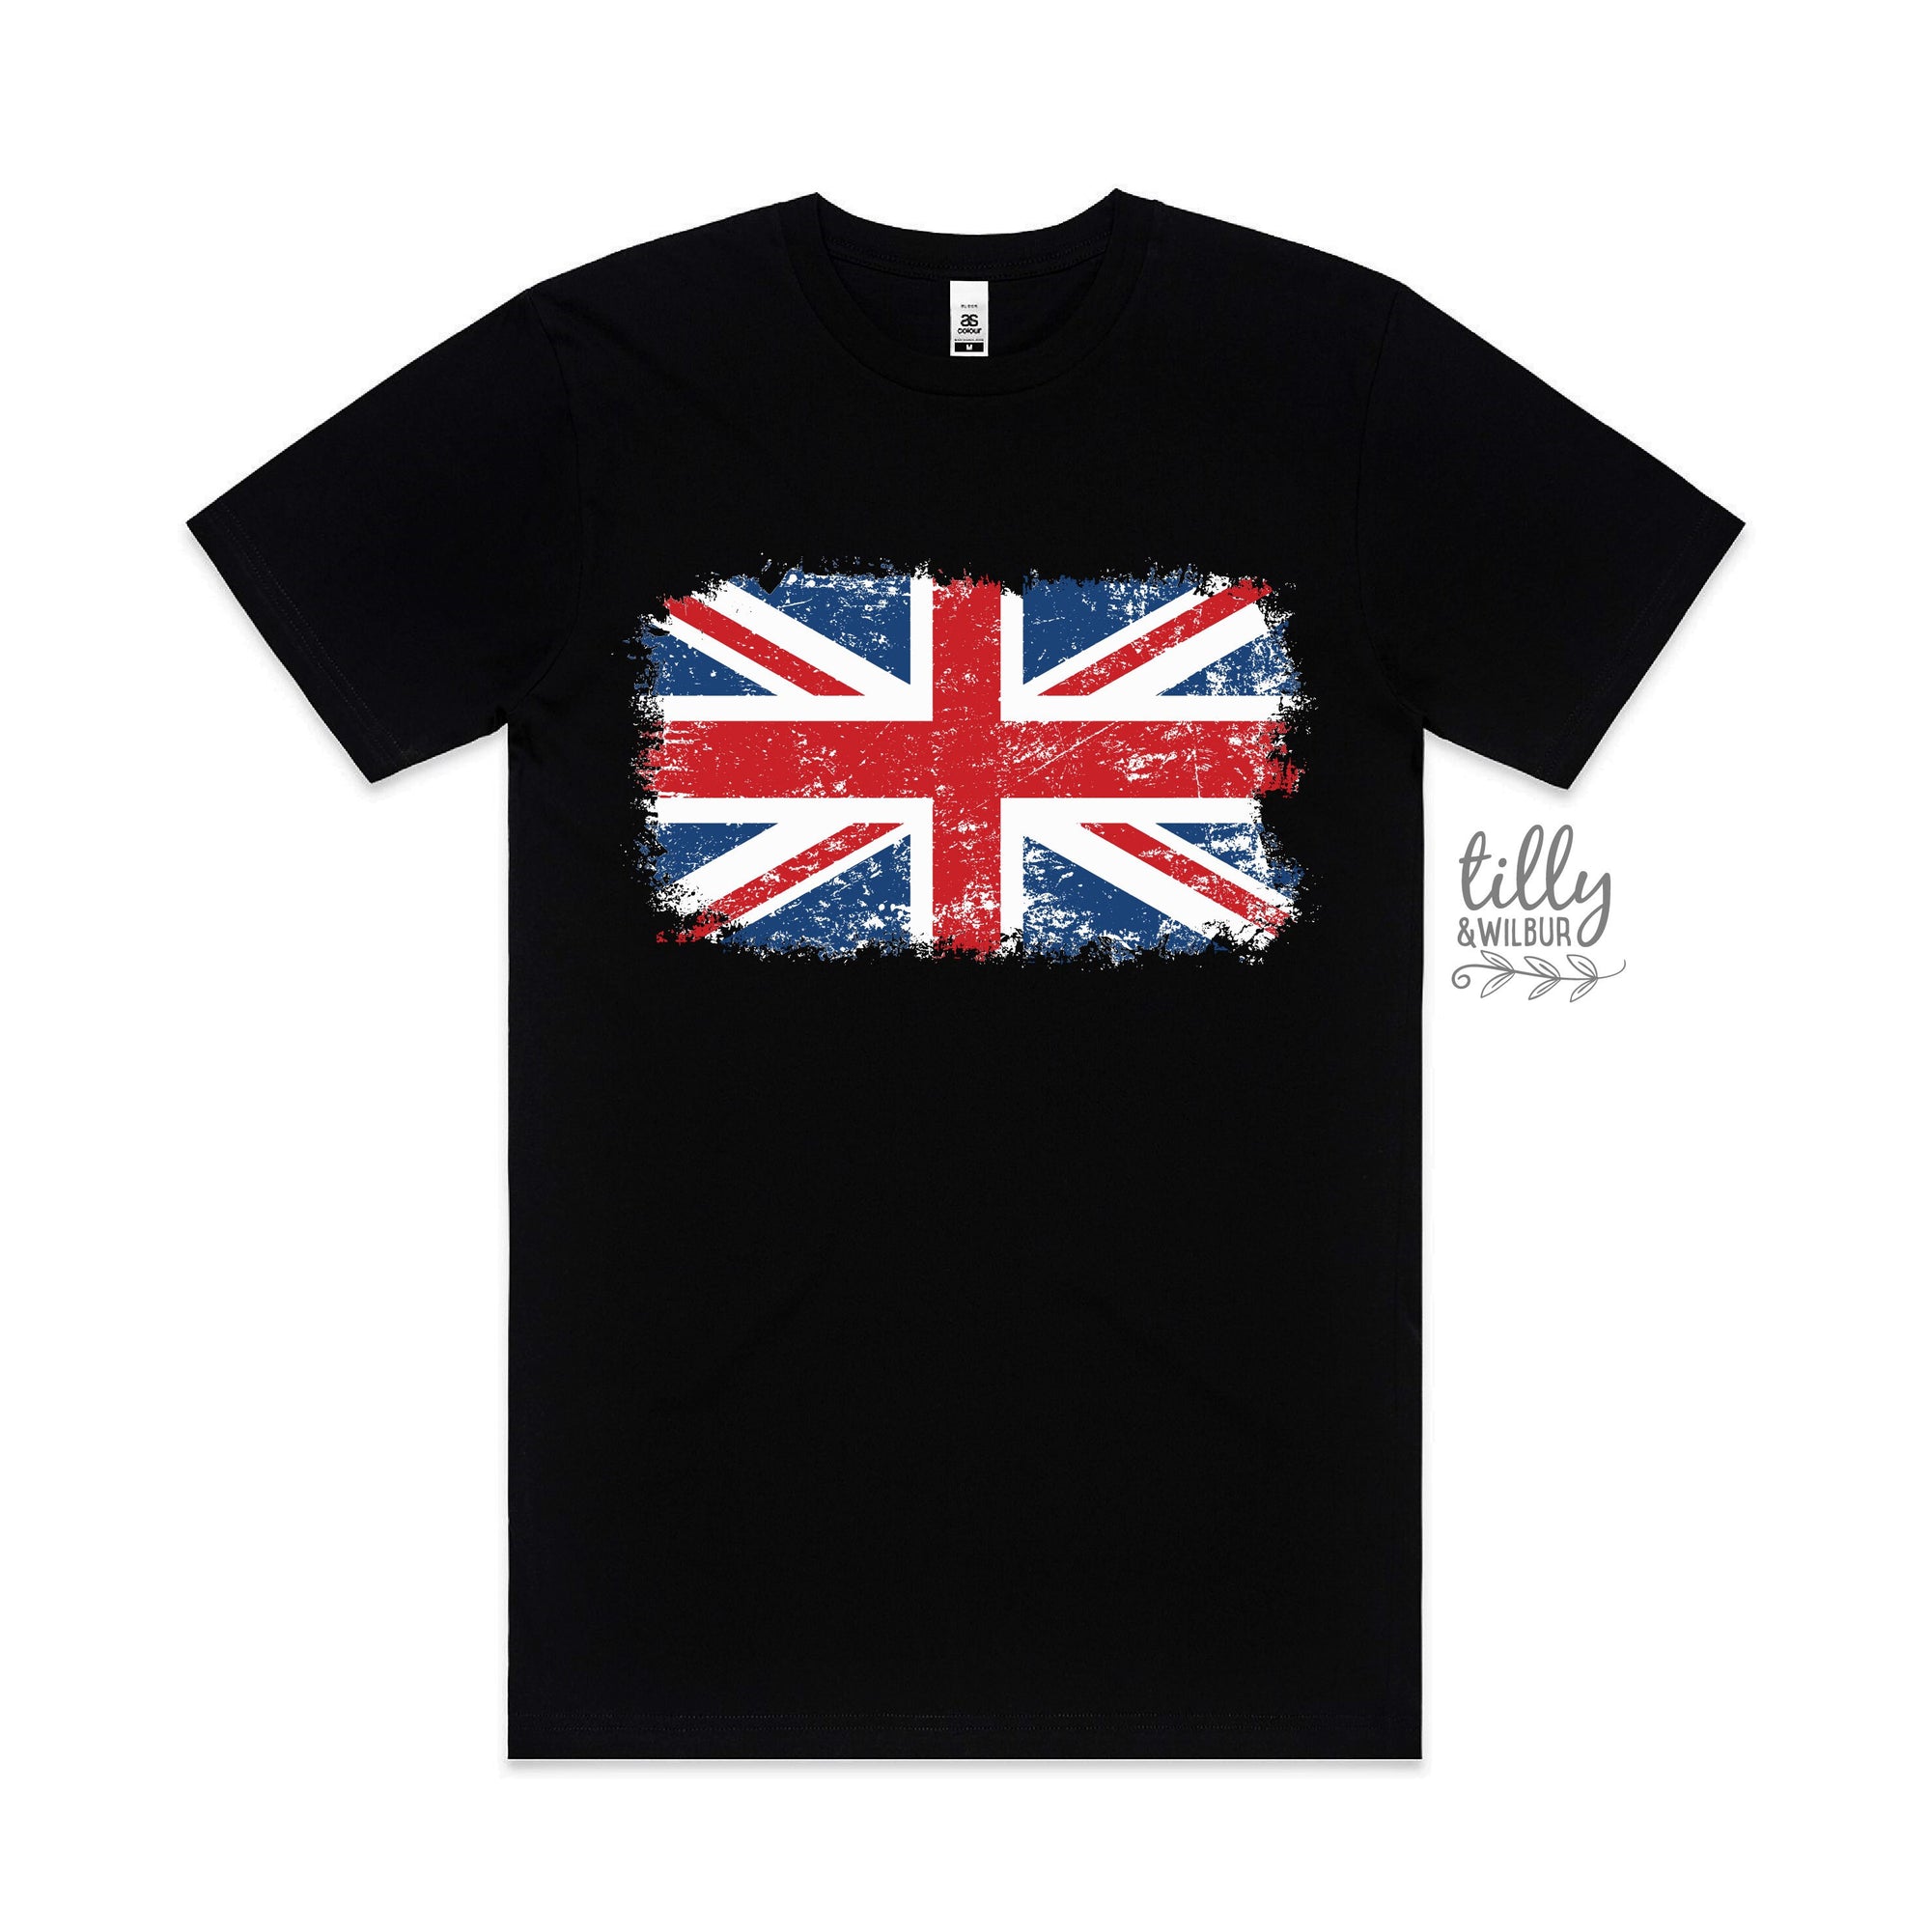 Union Jack T-Shirt, Grunge Union Jack, Queen Elizabeth II Platinum Jubilee 2022, Queens Golden Jubilee T-Shirt 70th Year Anniversary T-Shirt